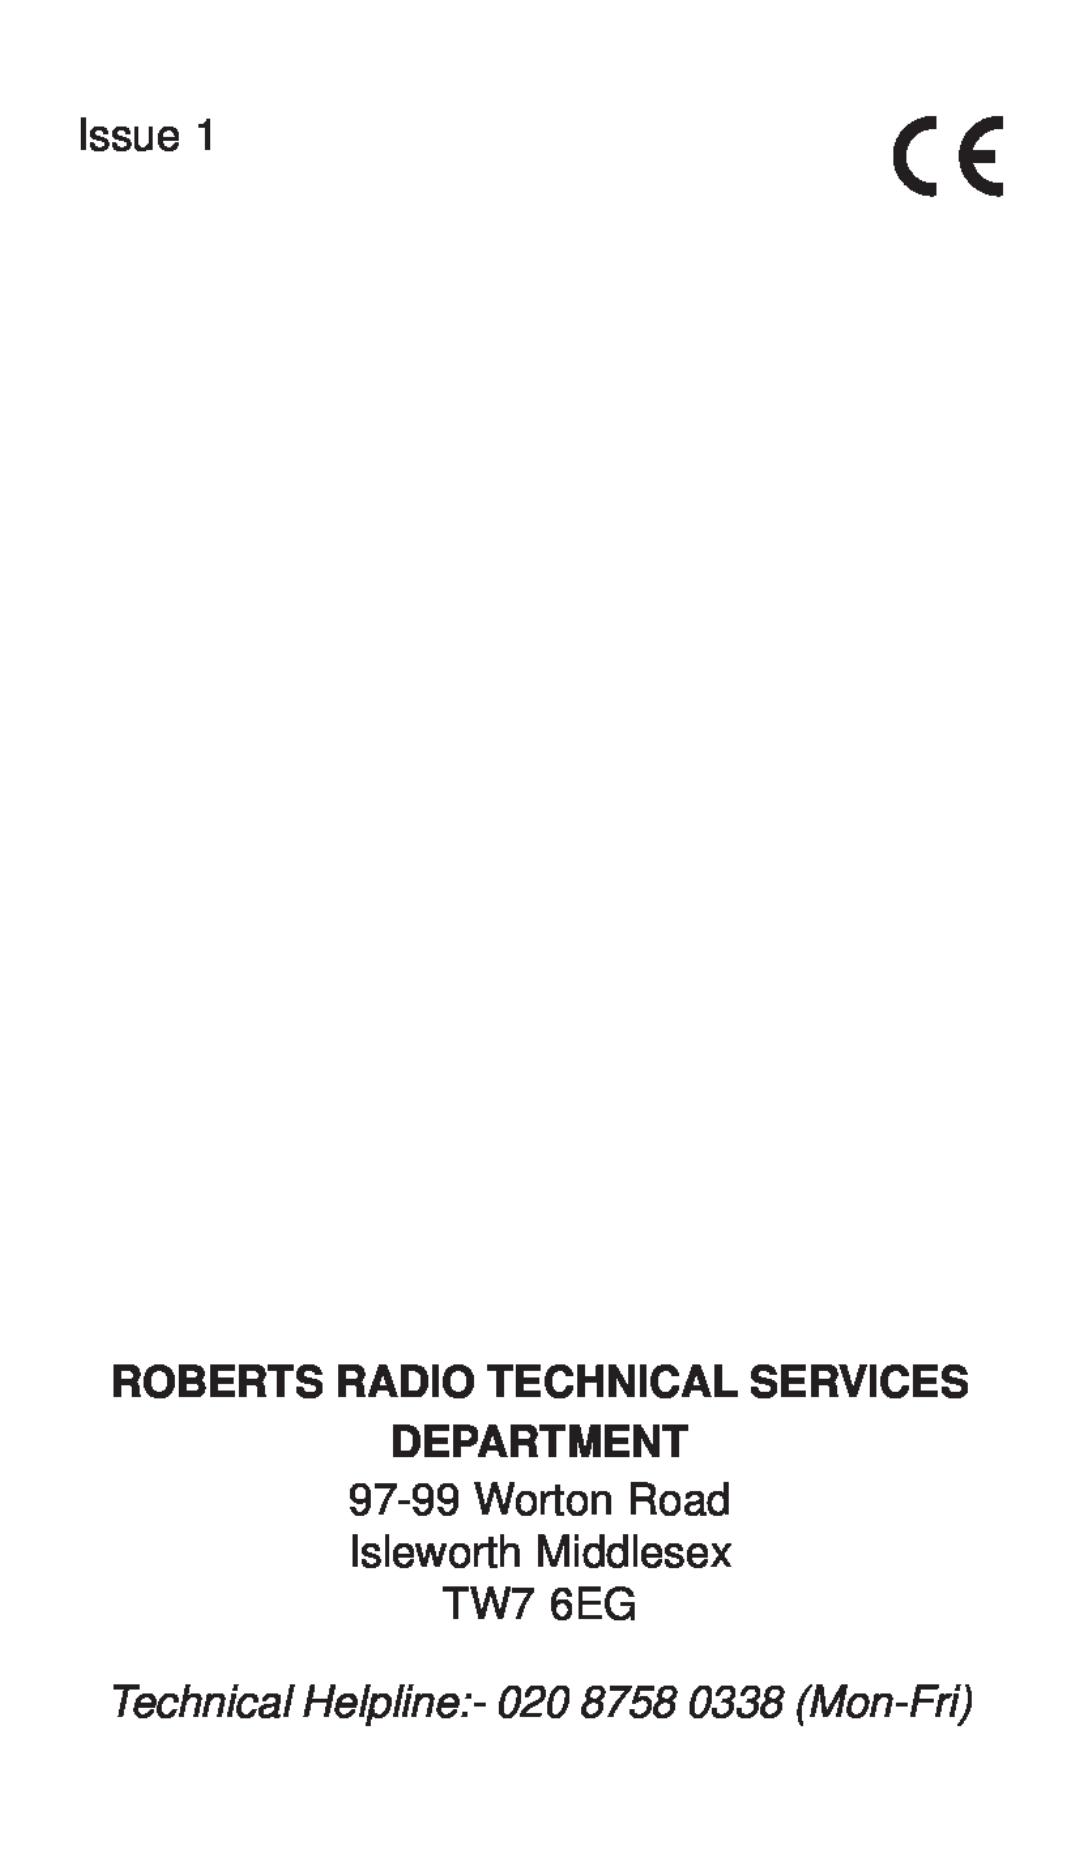 Roberts Radio R9924 manual Roberts Radio Technical Services Department, Issue, 97-99Worton Road Isleworth Middlesex TW7 6EG 